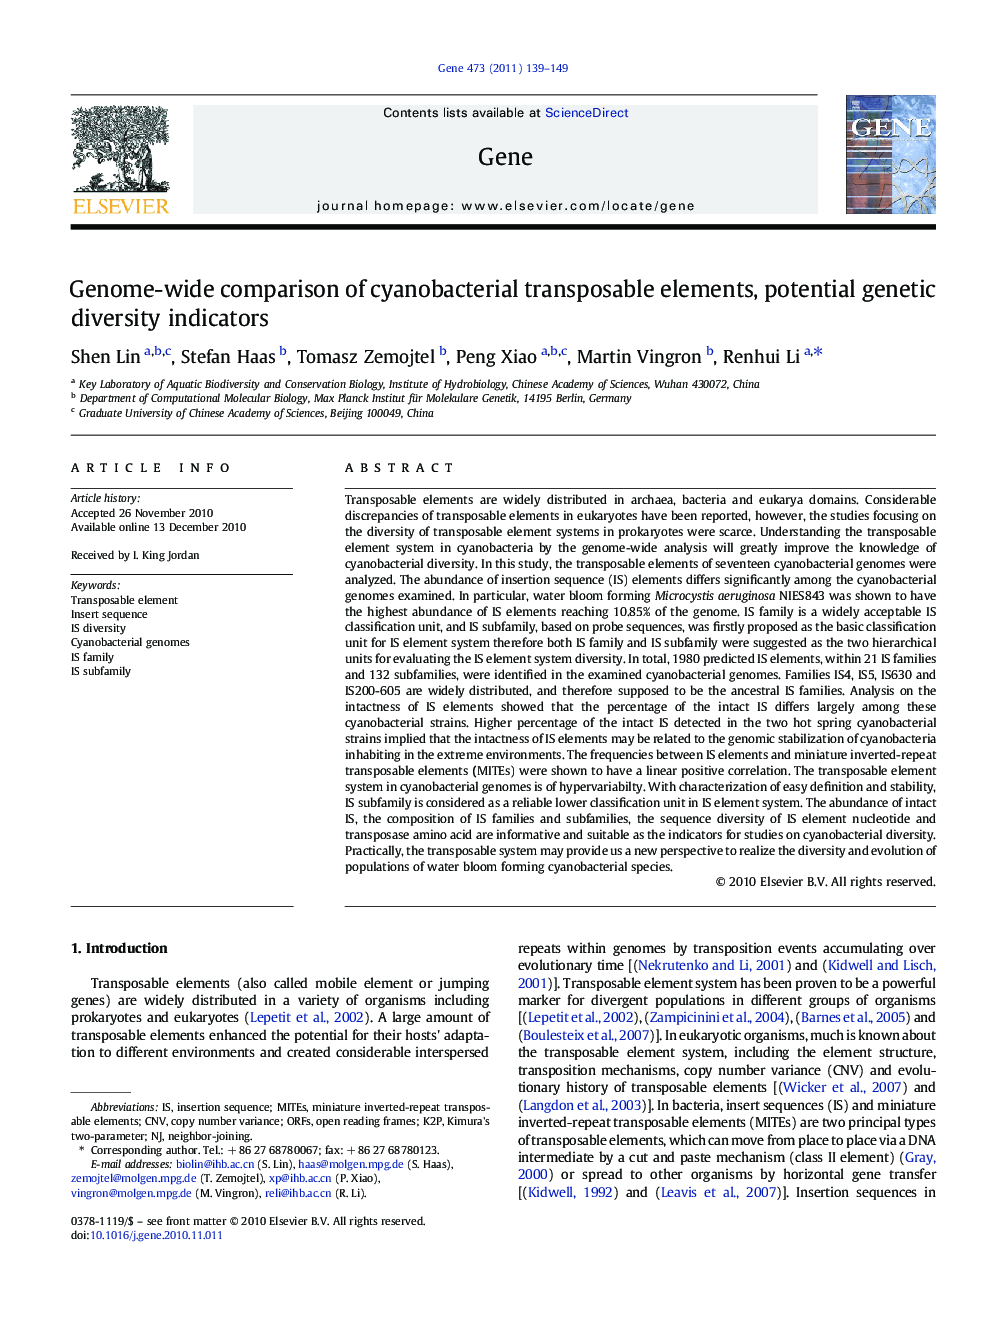 Genome-wide comparison of cyanobacterial transposable elements, potential genetic diversity indicators